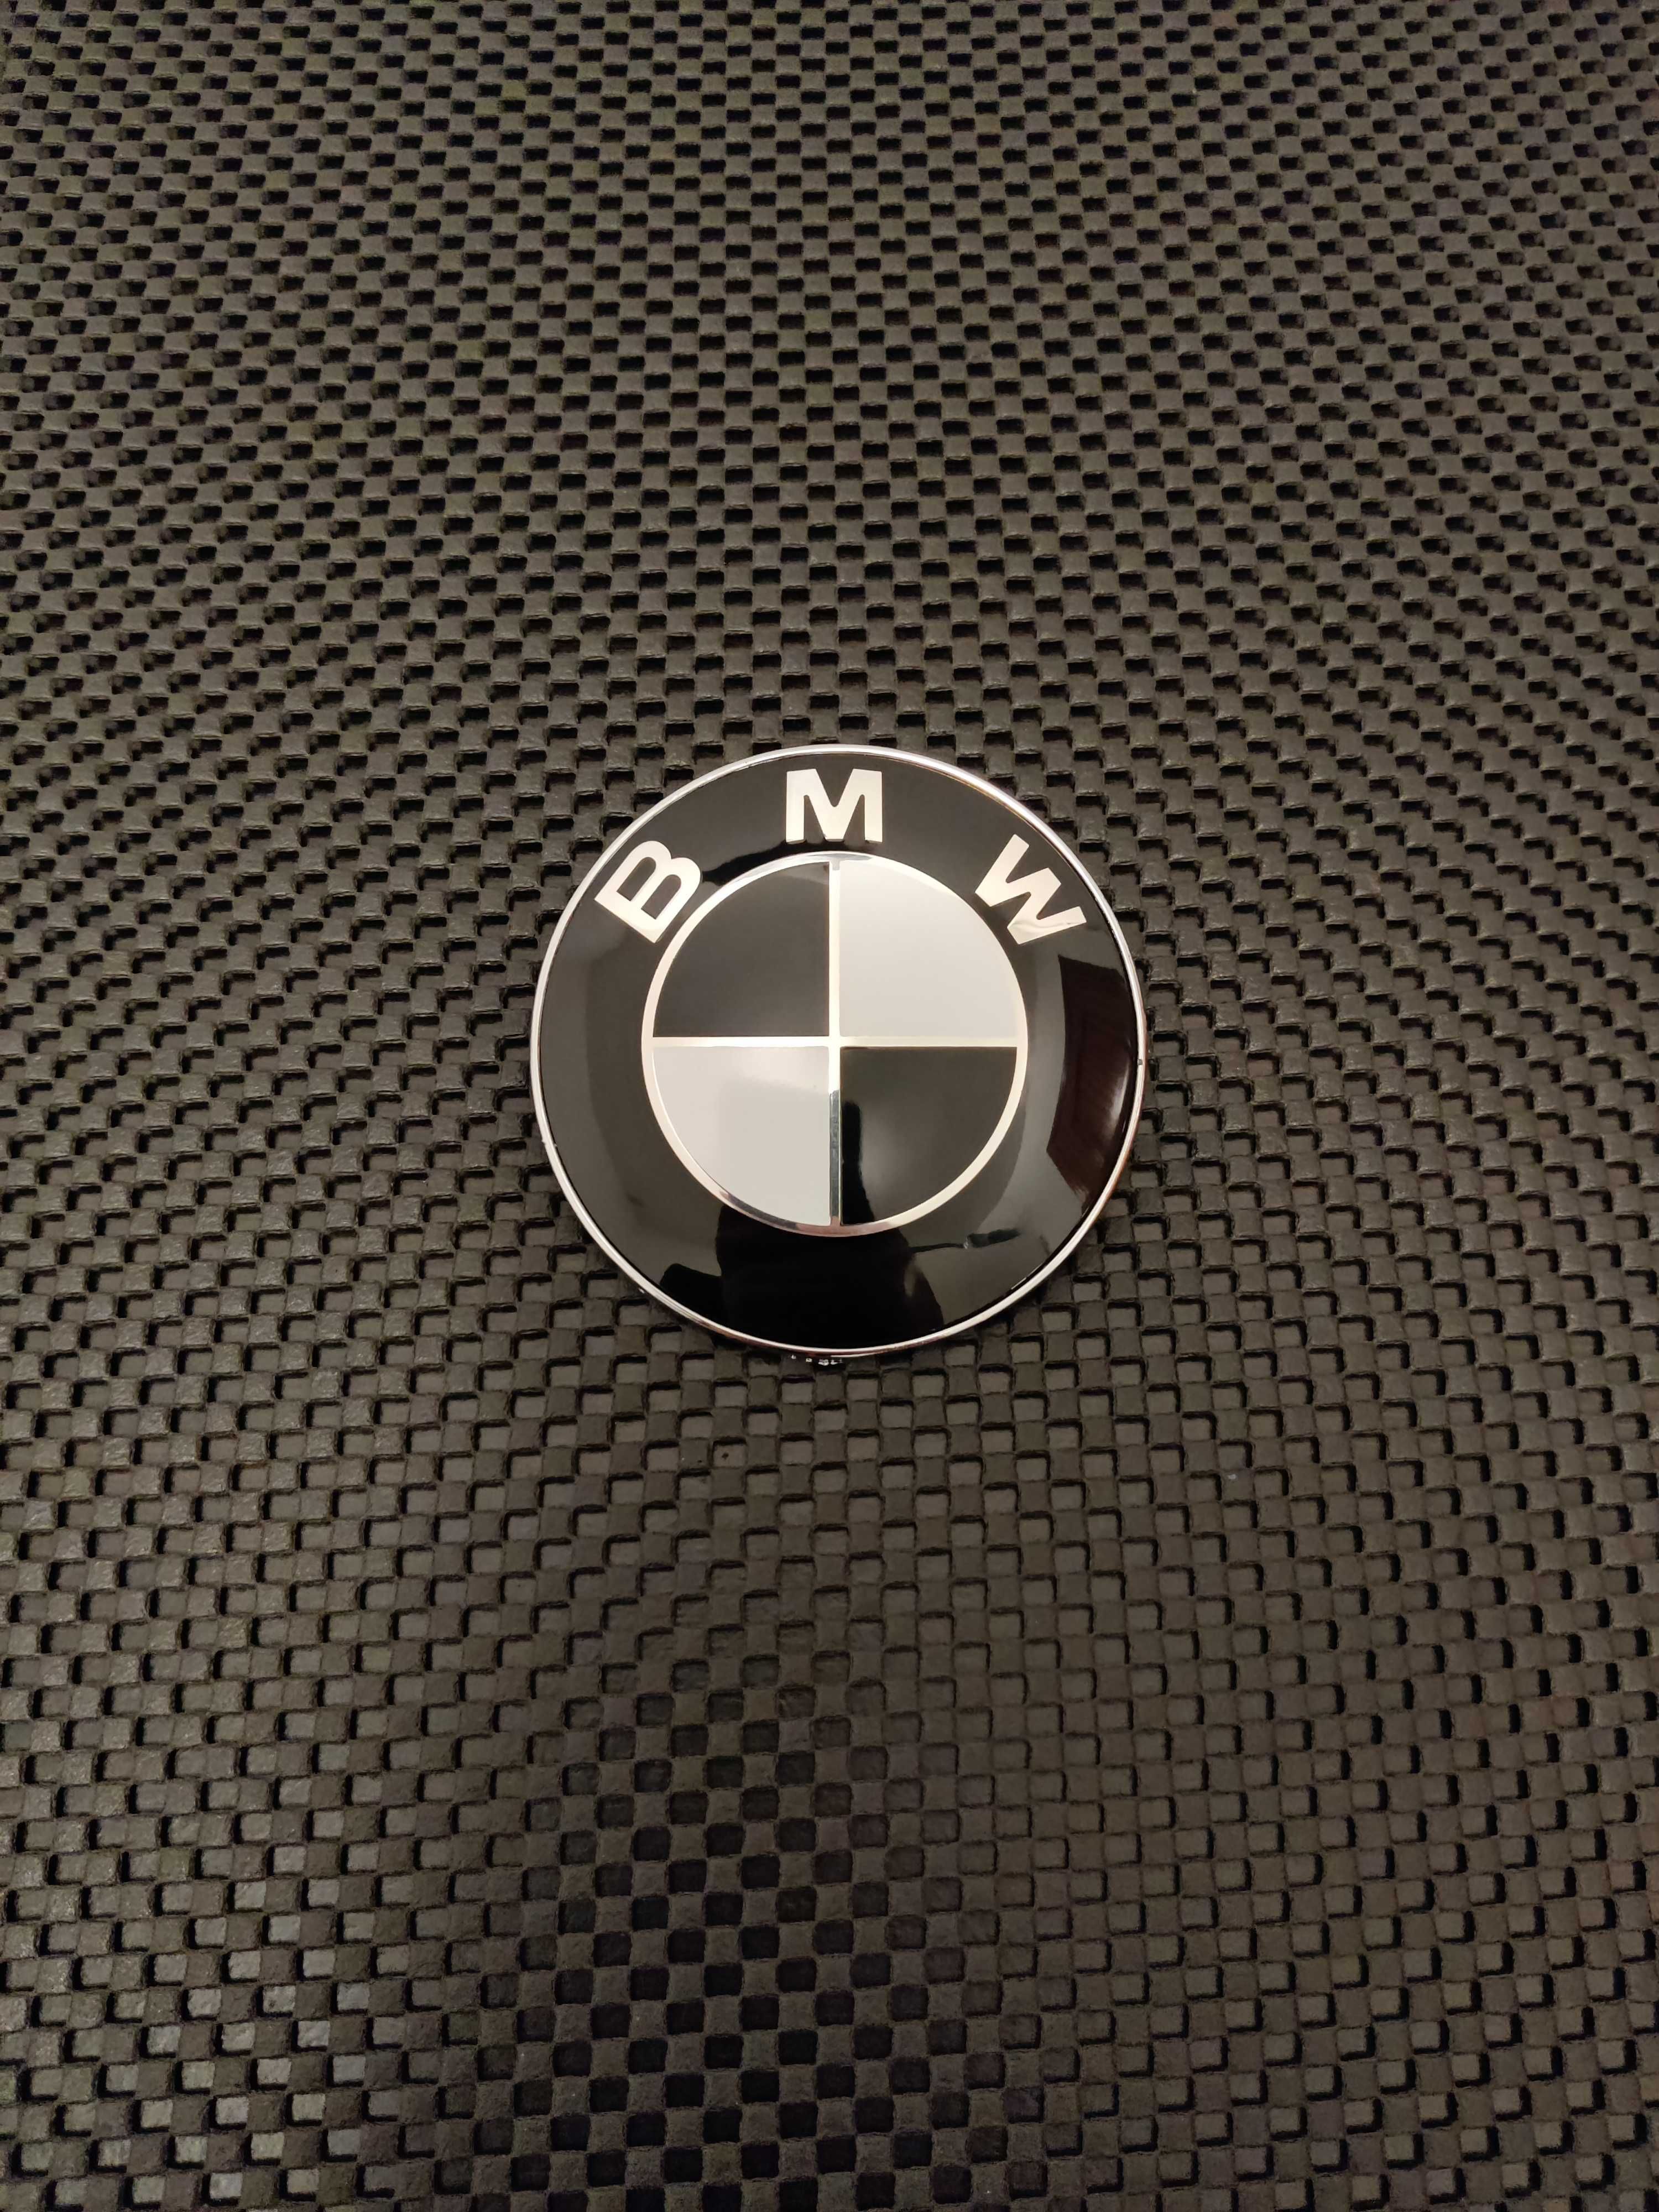 Emblema Logo BMW 82 mm si 74 mm NOUA51148132375  51148219237

Foarte b